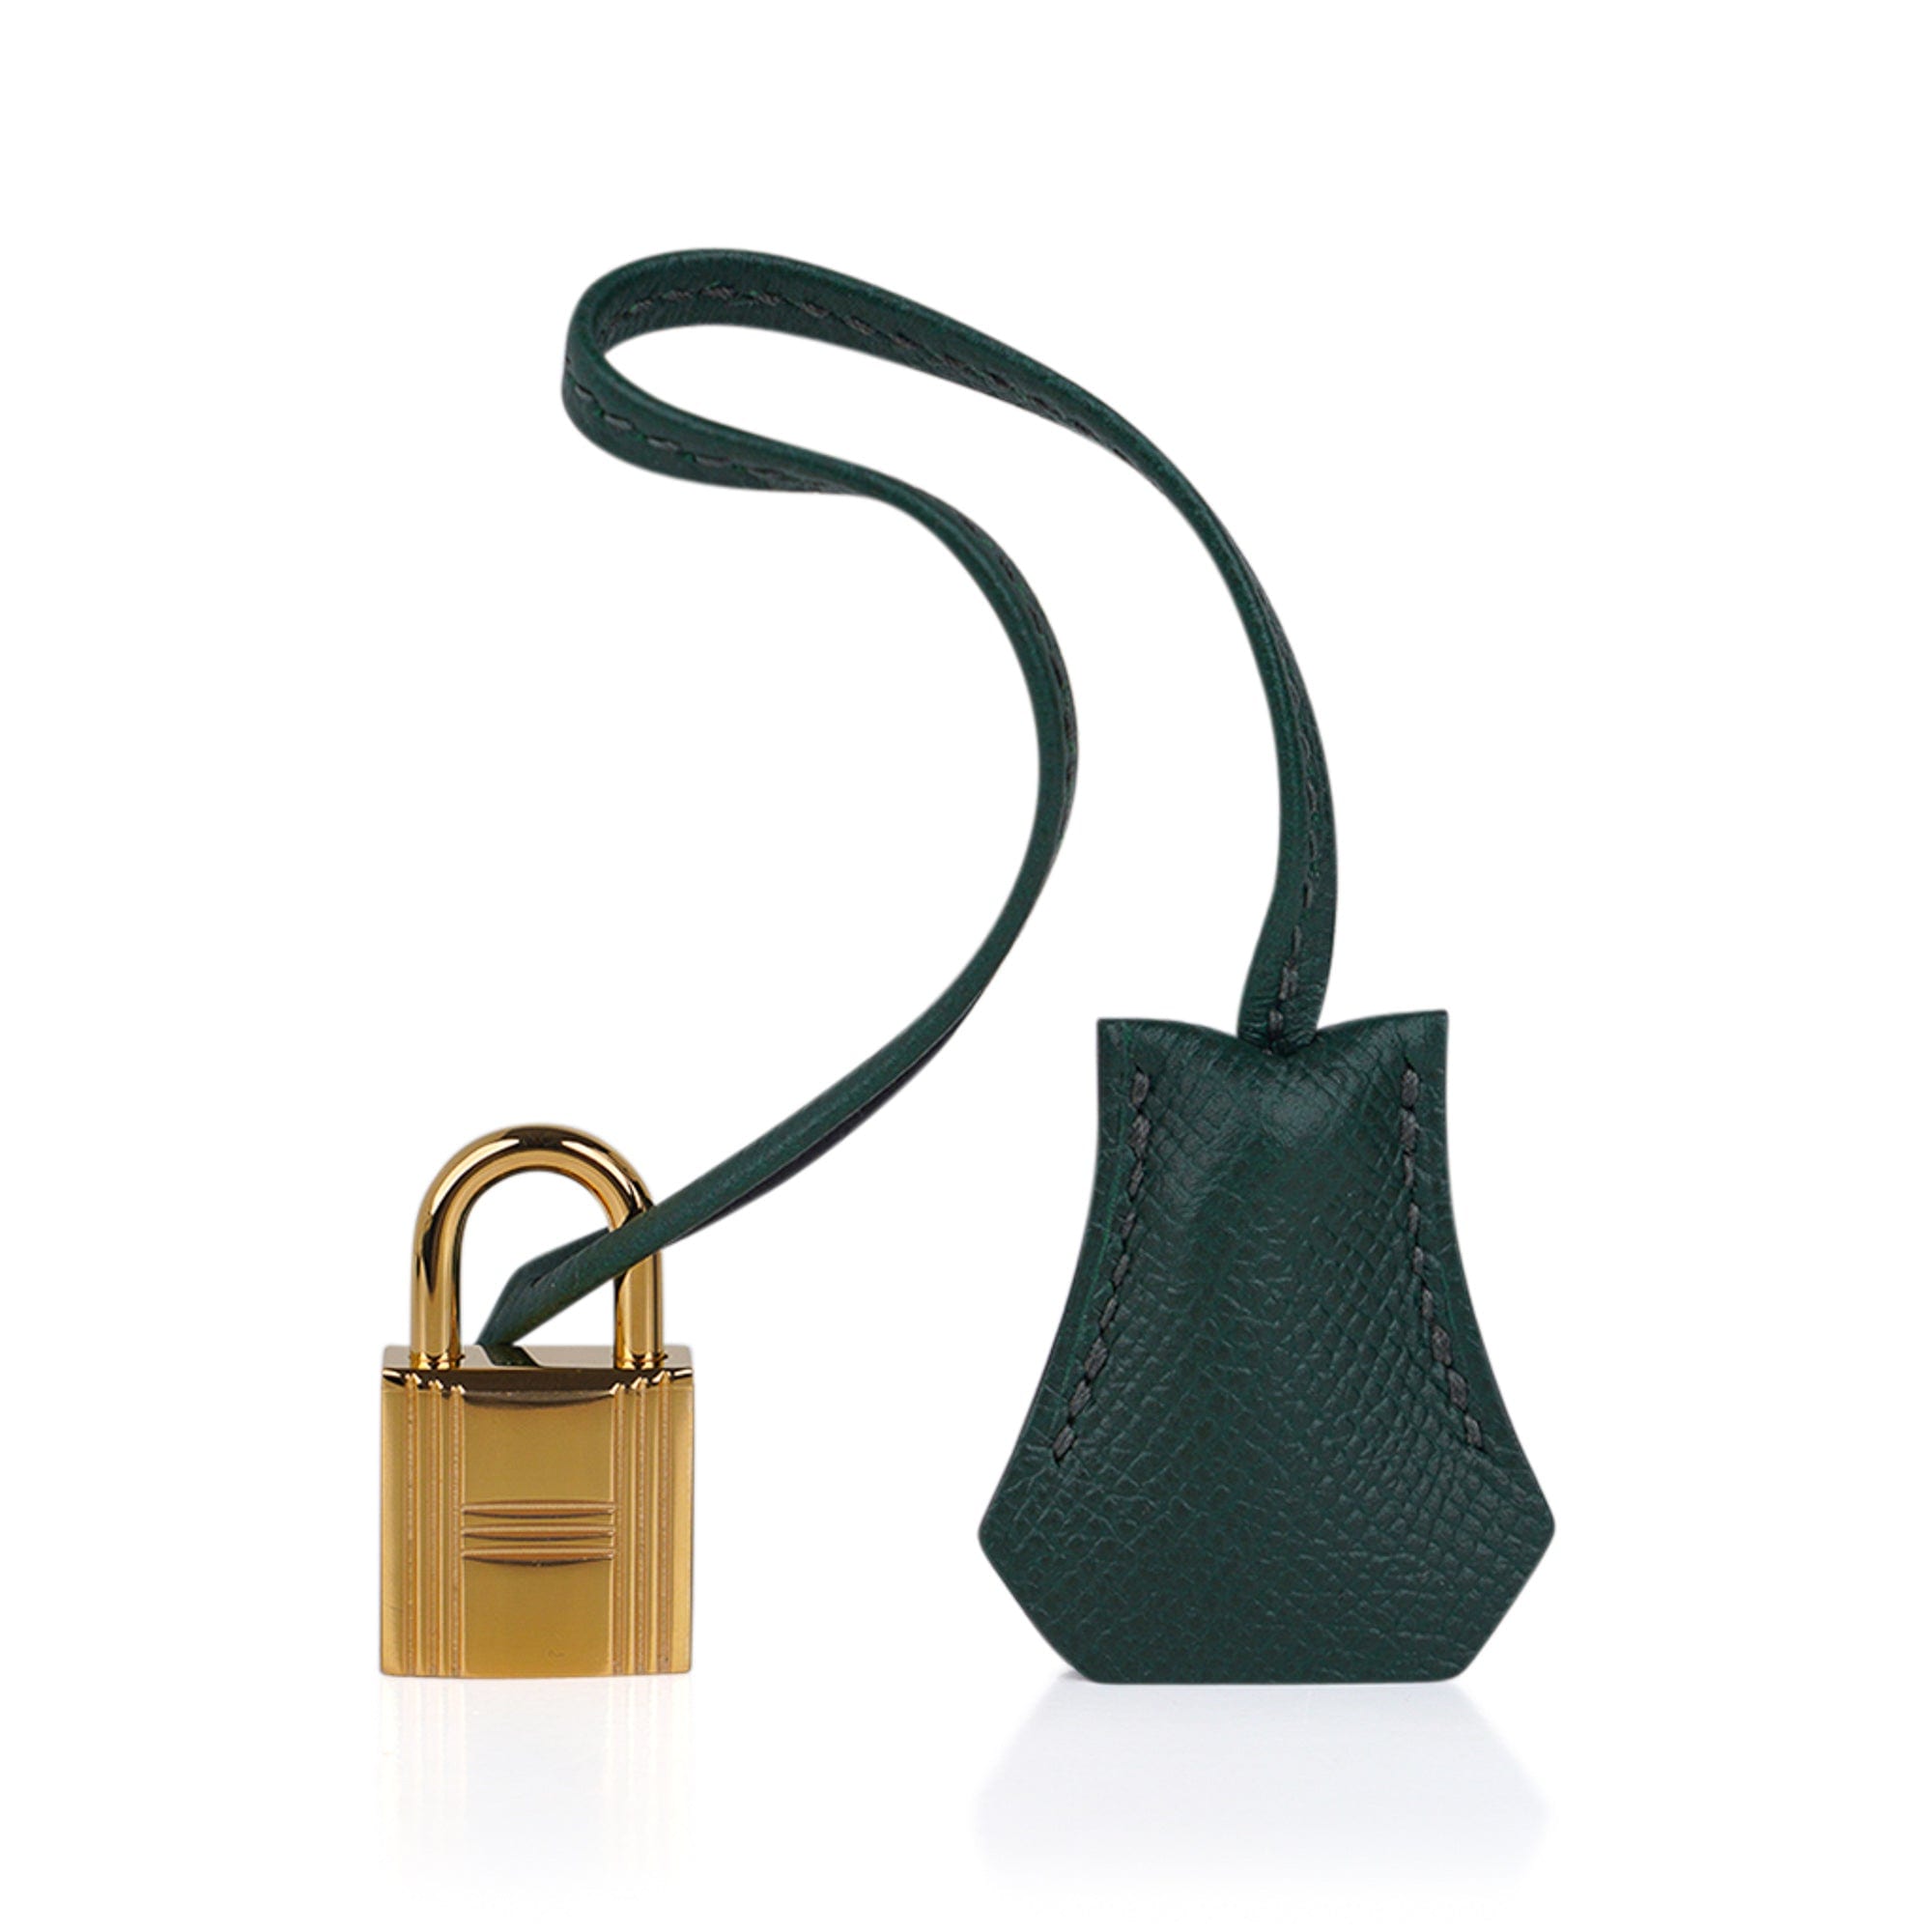 Hermès Kelly 28 cm Handbag in Vert de Gris Epsom Leather